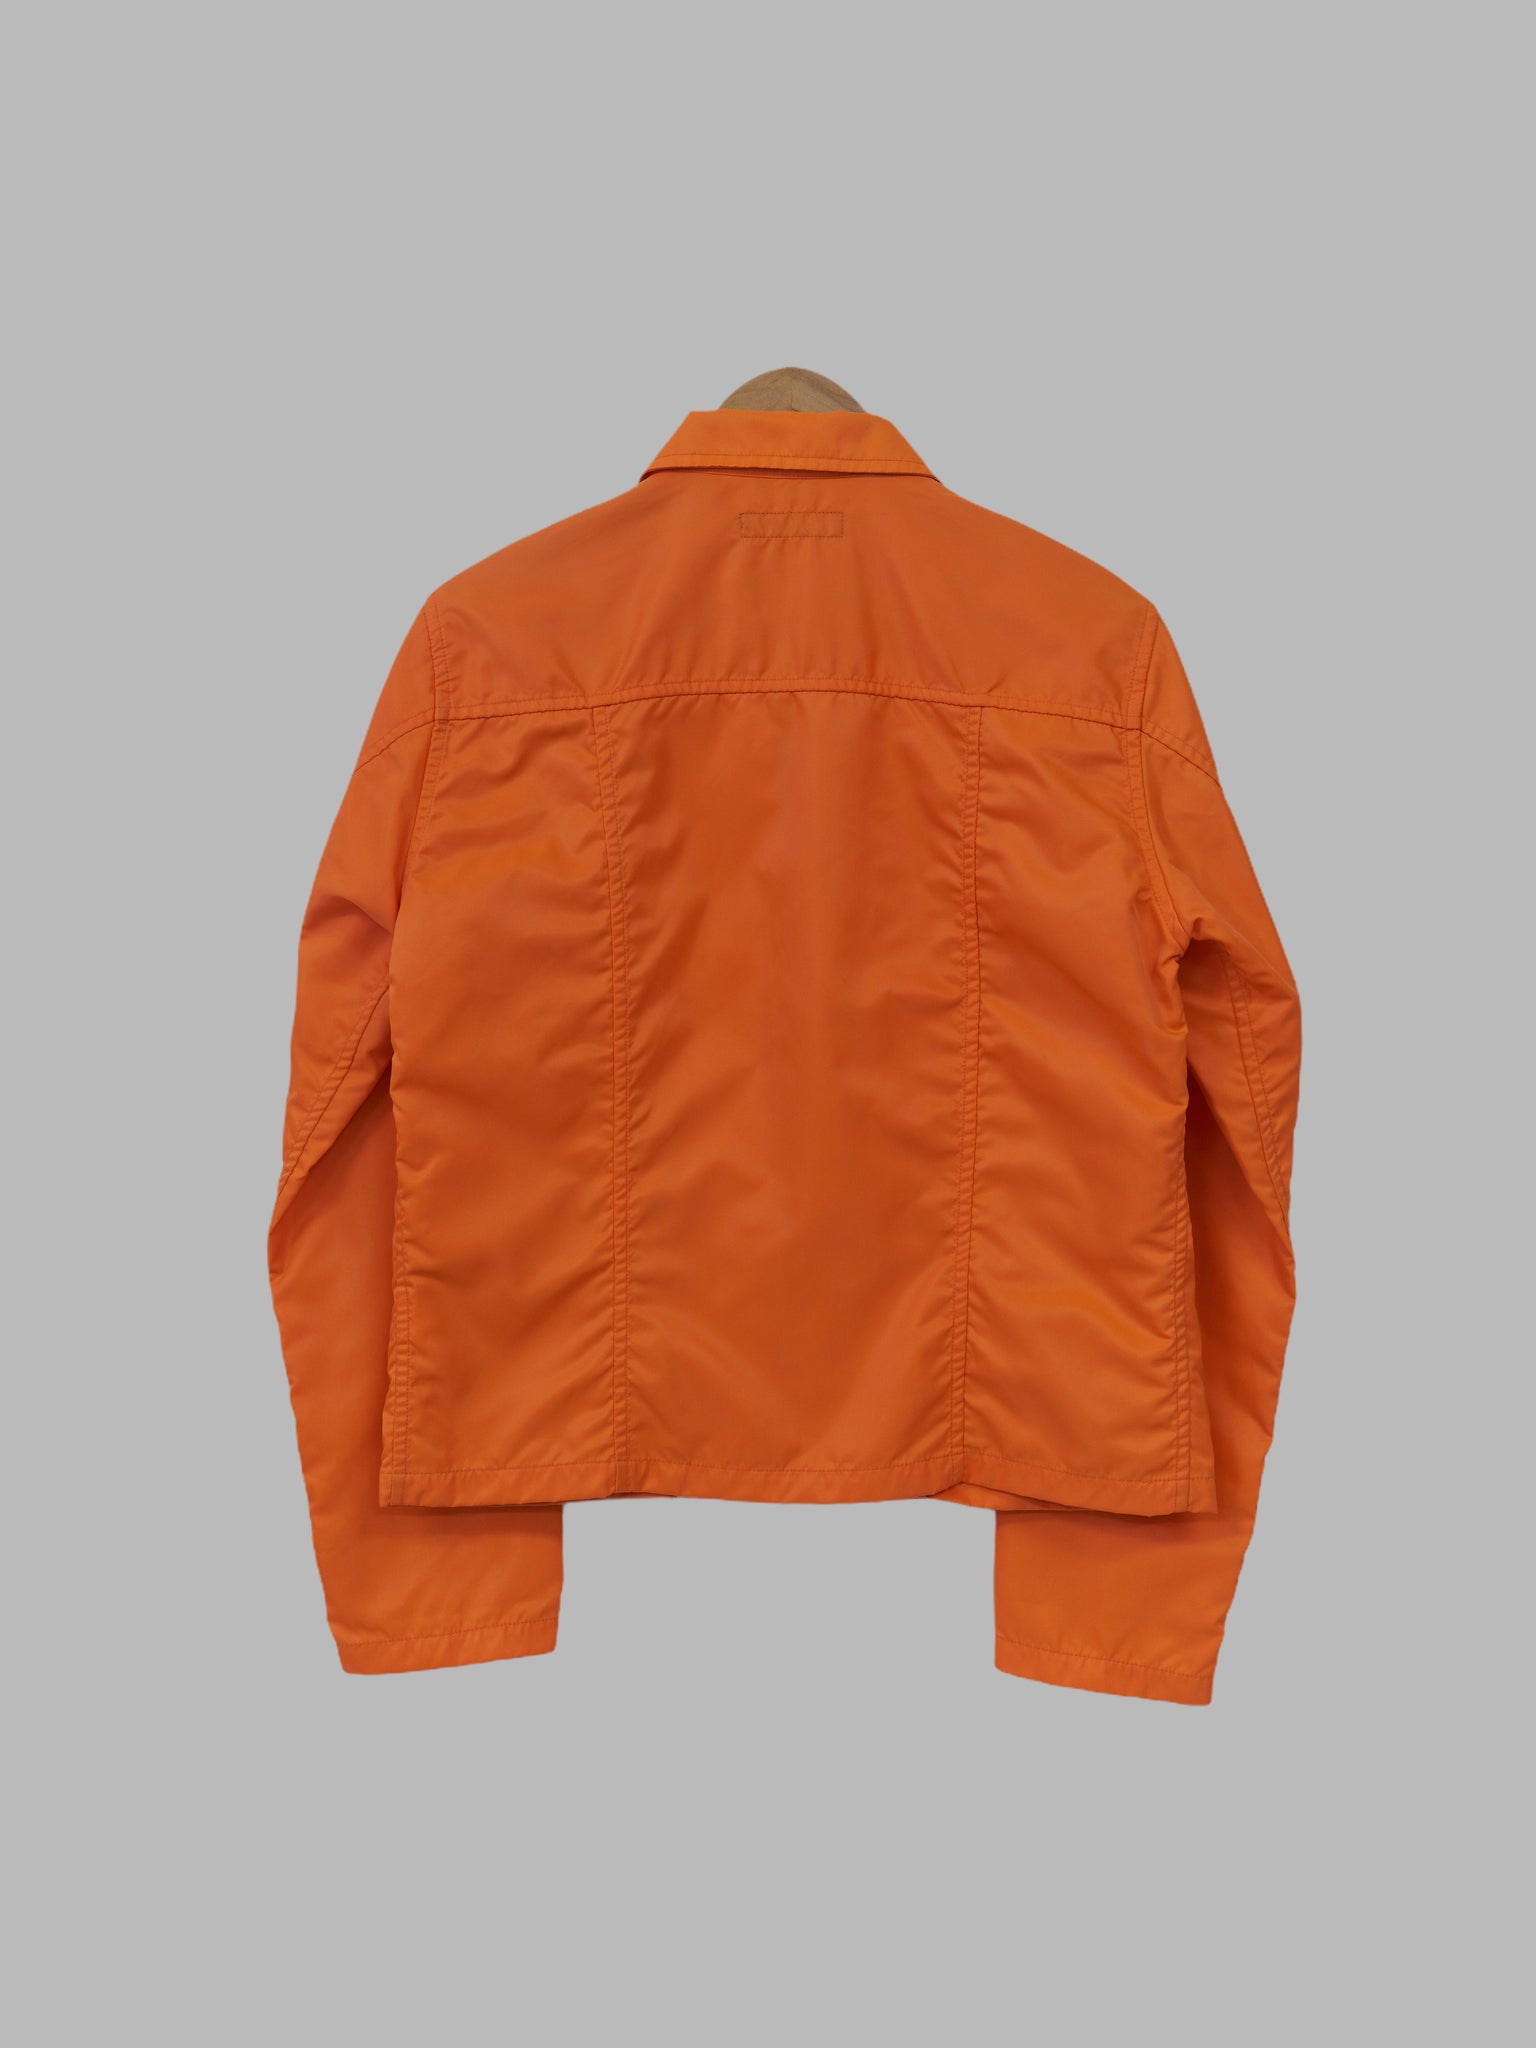 LQ Y's for Men Yohji Yamamoto orange nylon angled pocket zip jacket - approx S